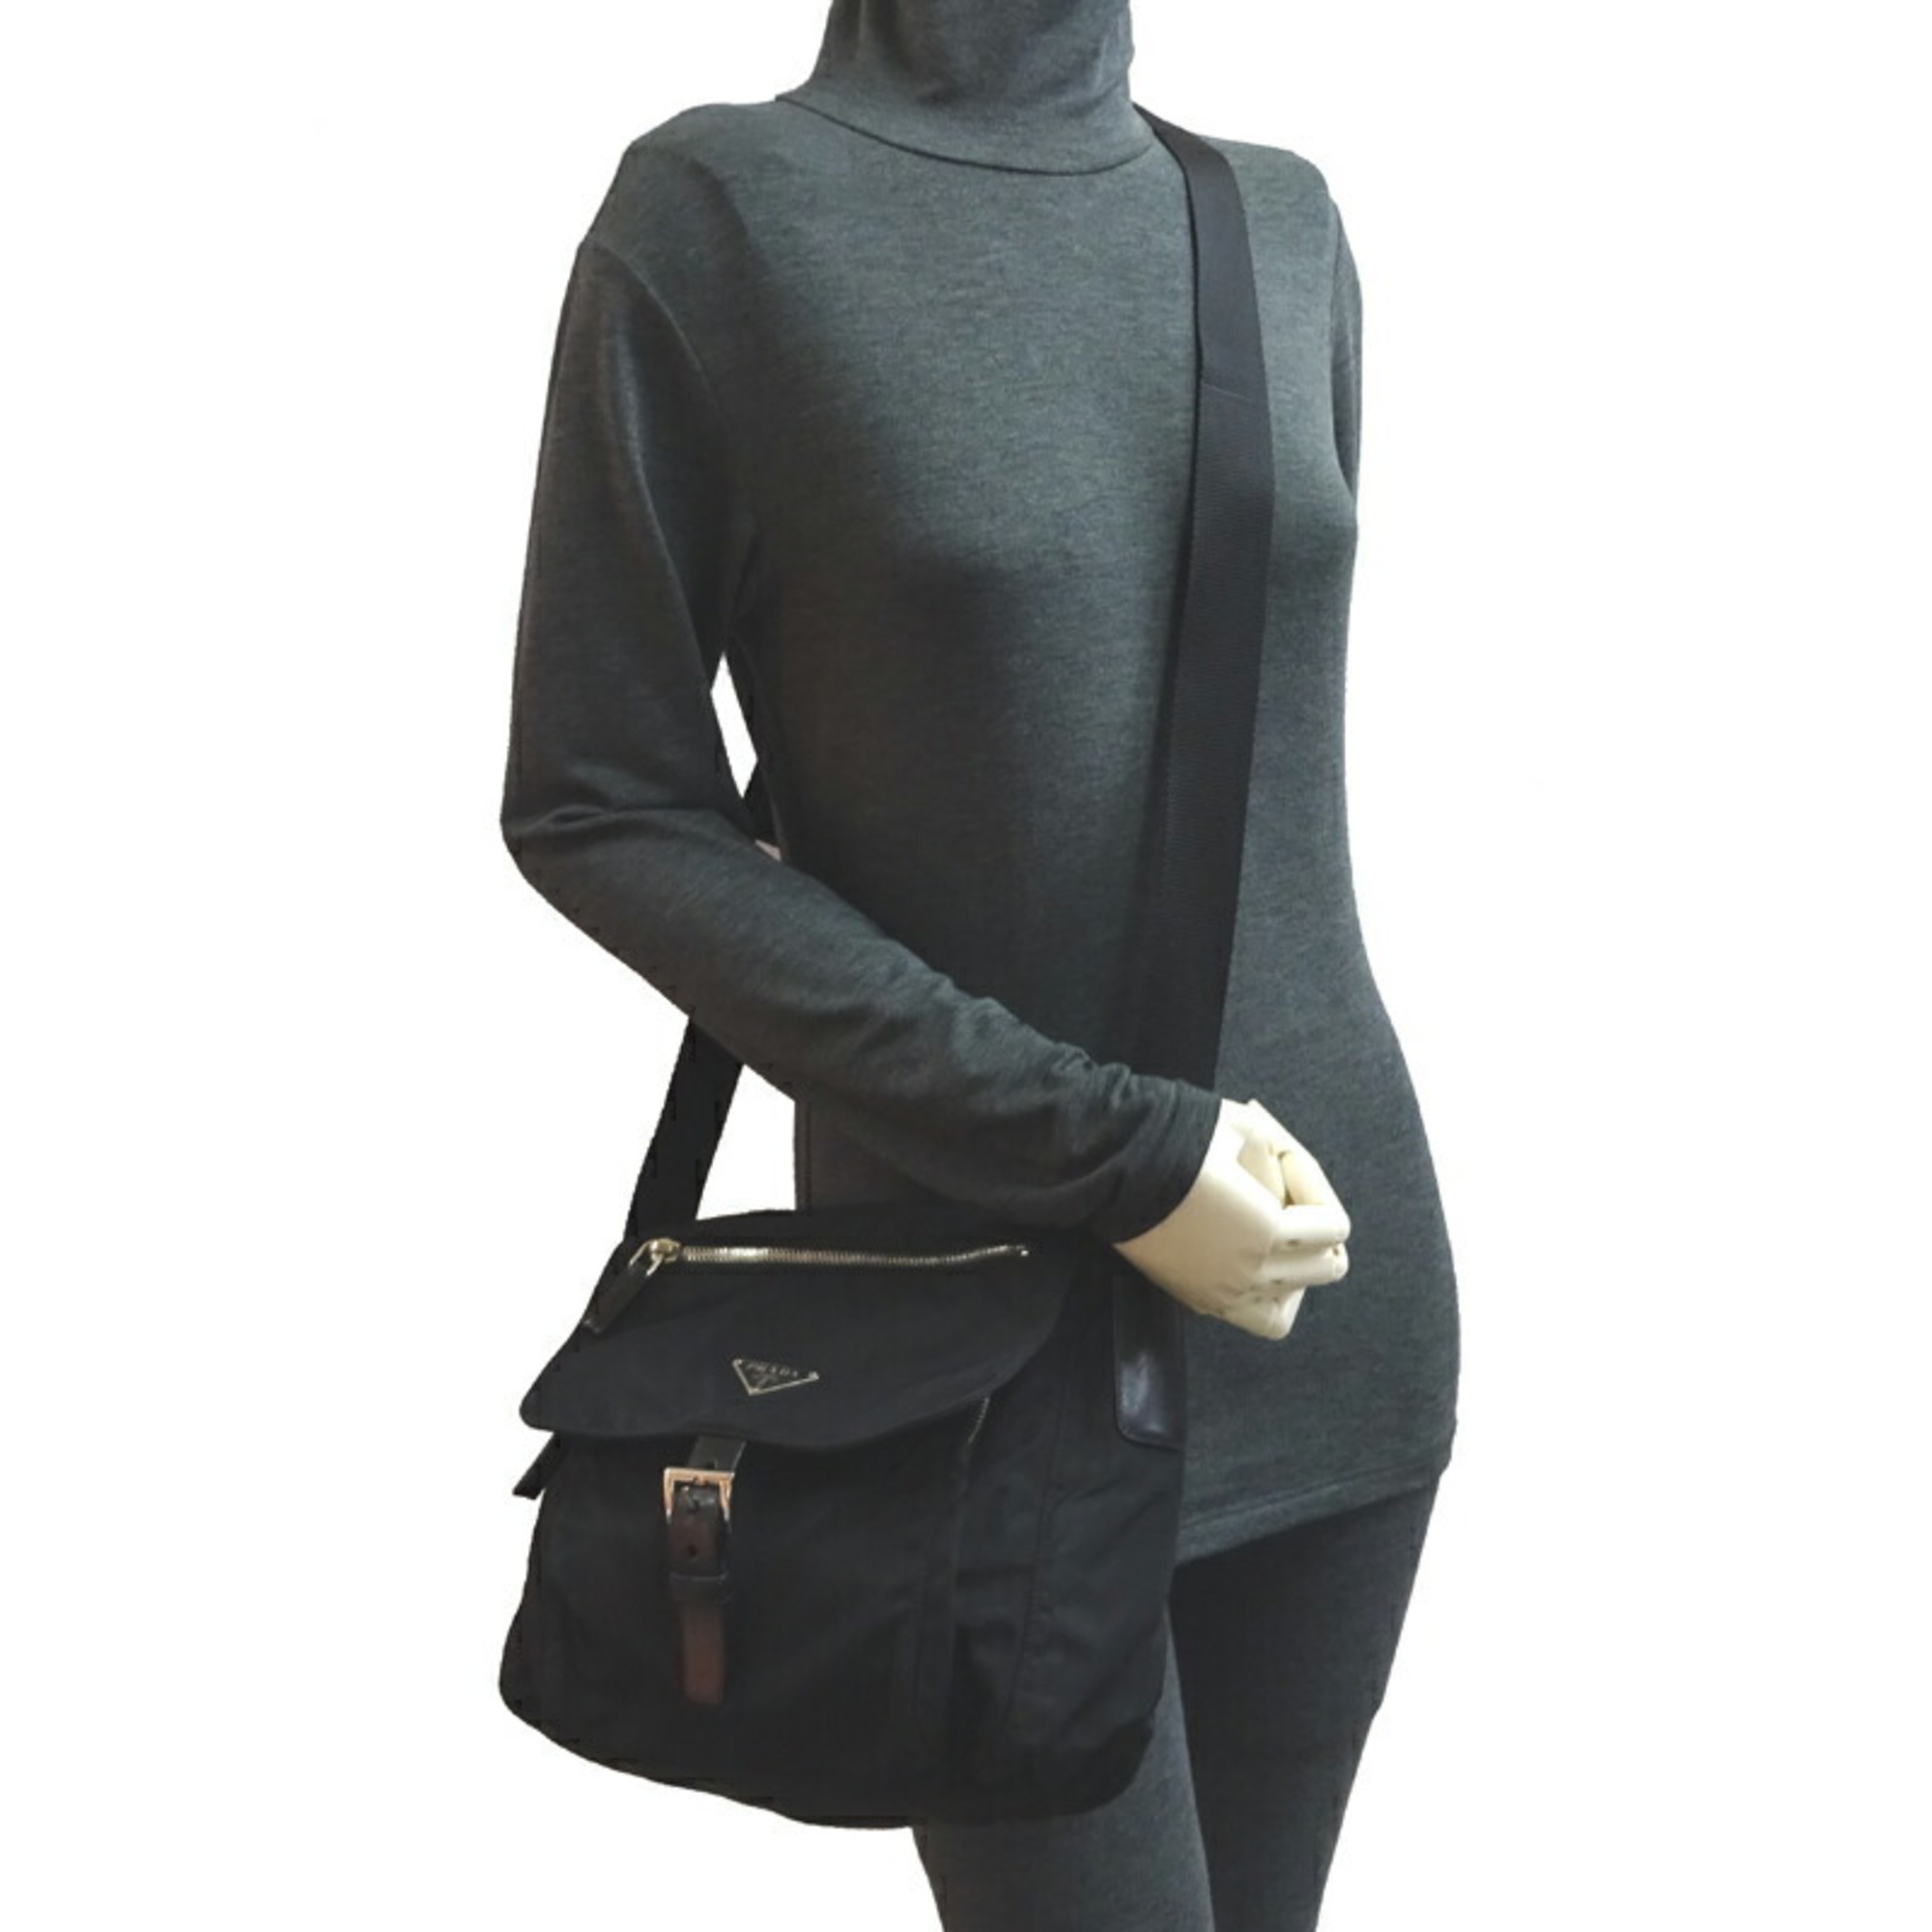 Prada Women's Nylon Shoulder Bag NERO